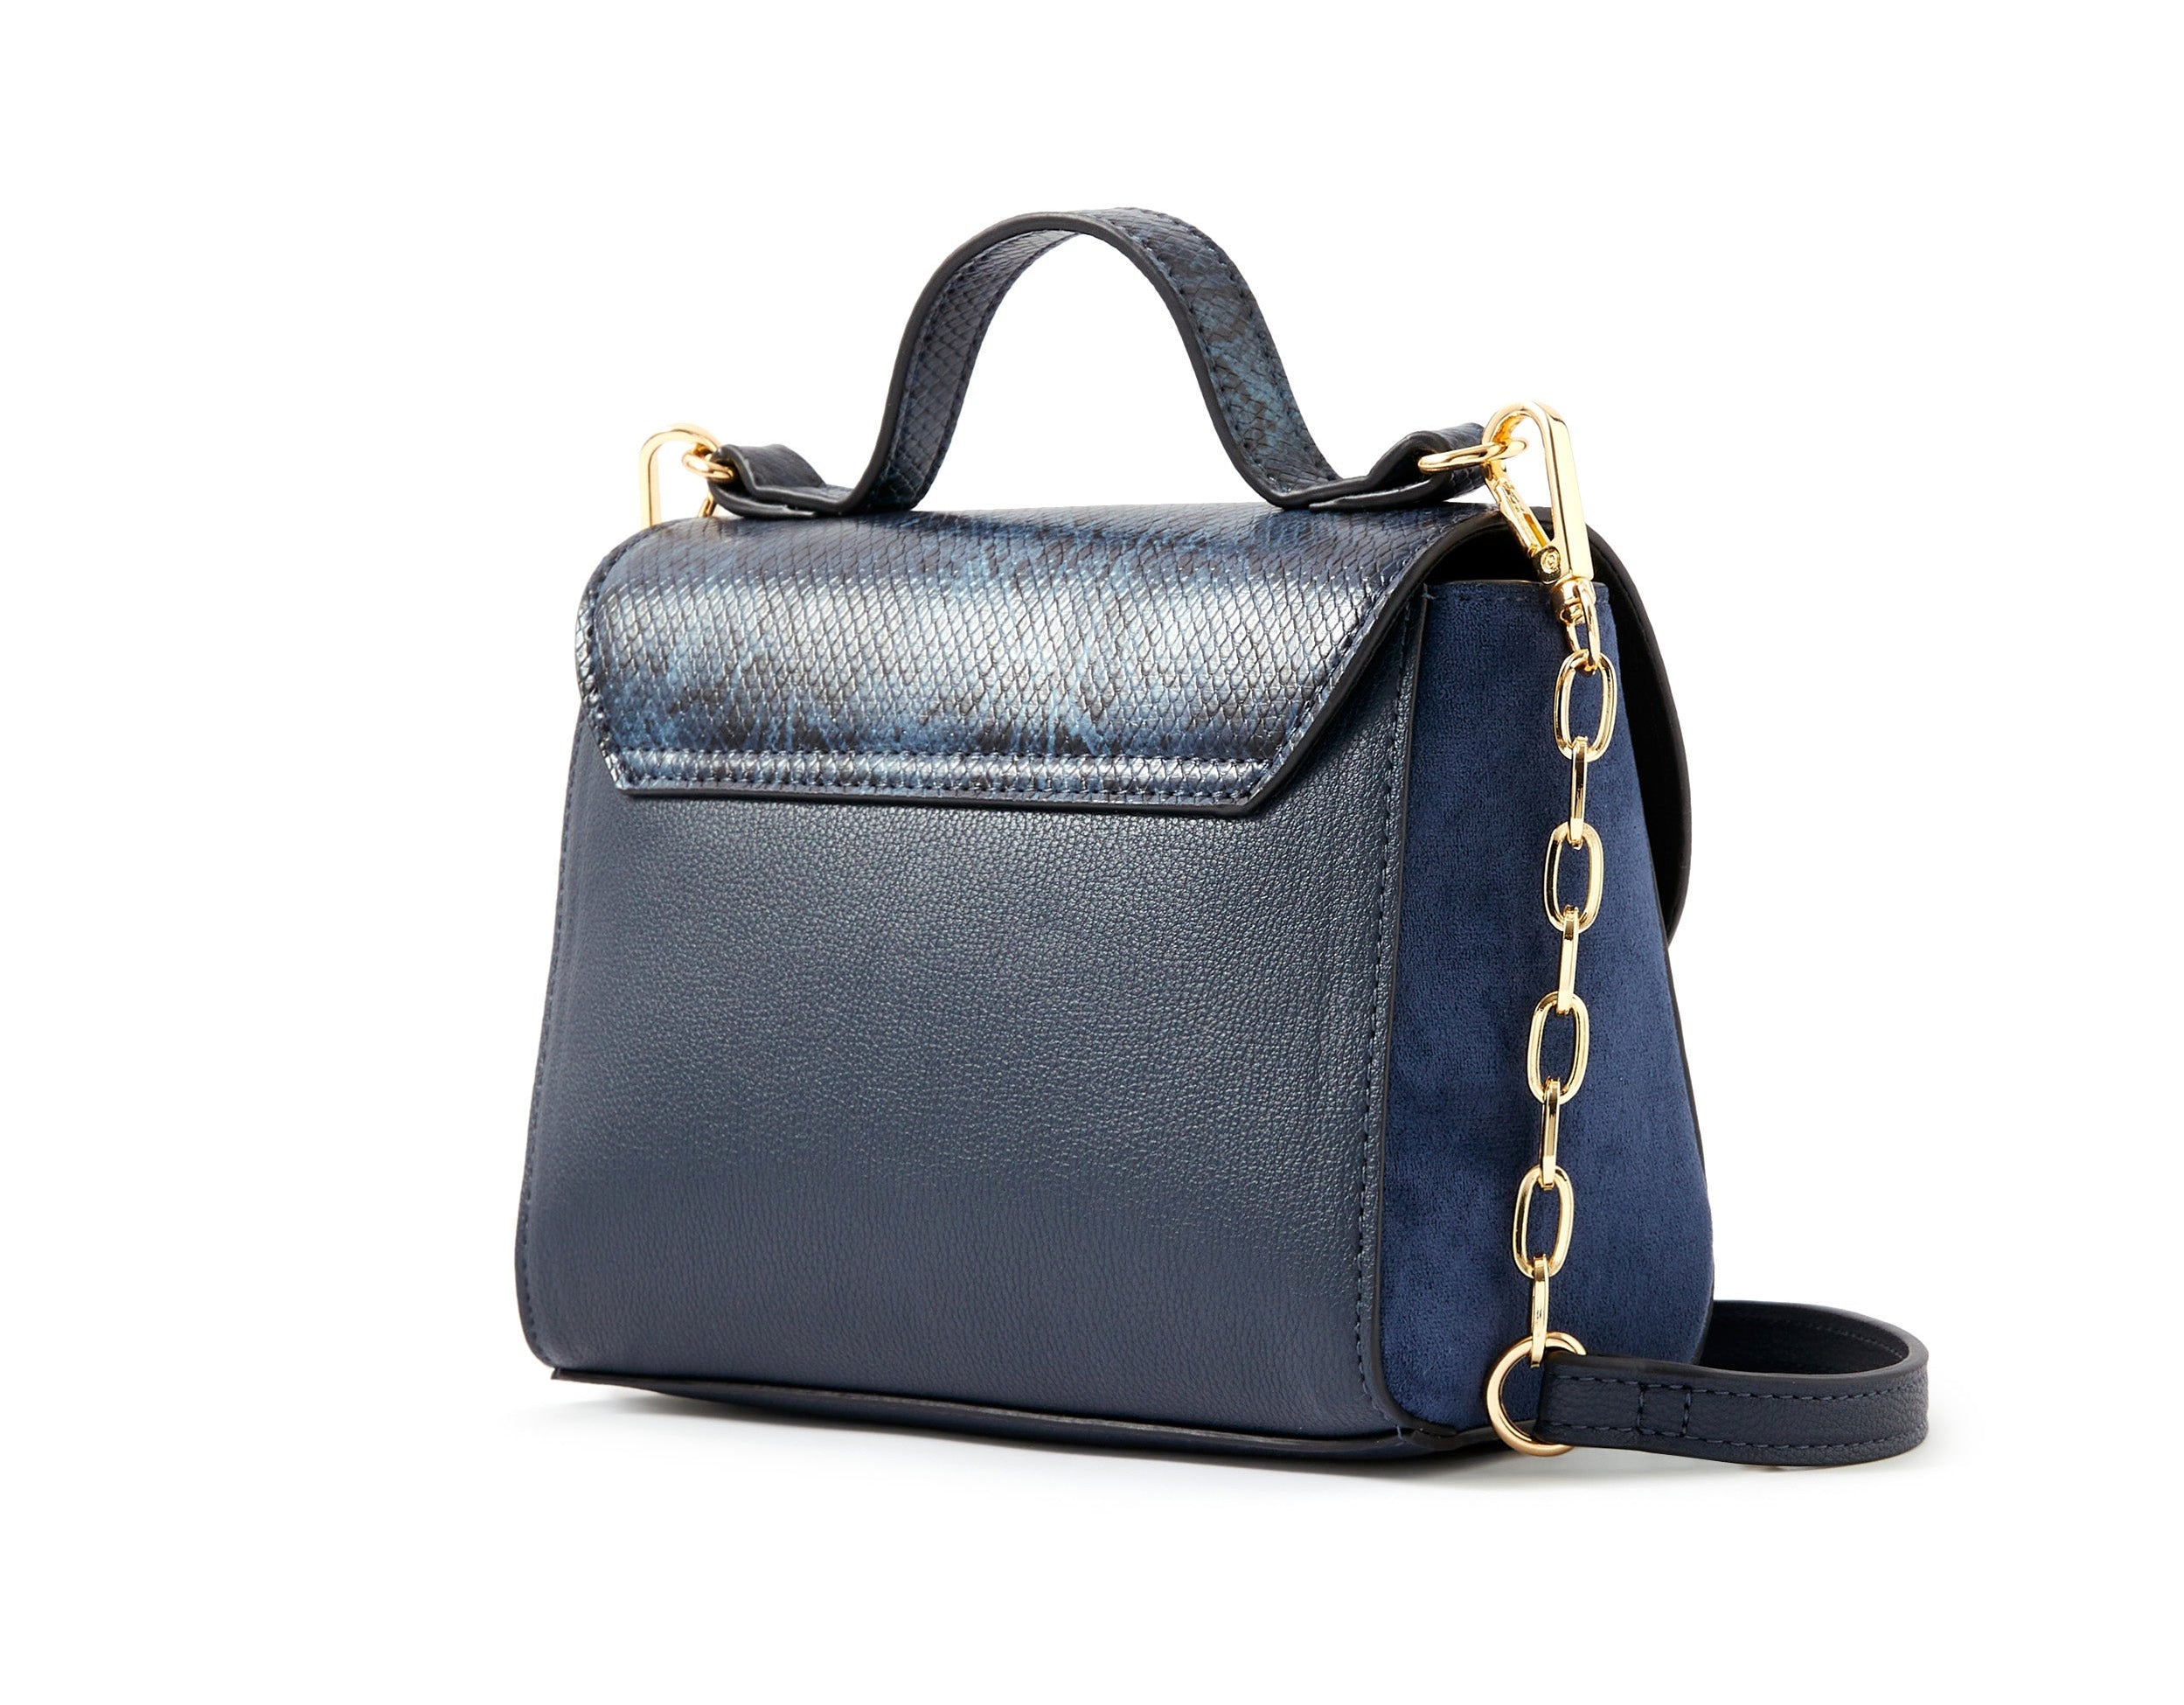 Accessorize London women's Faux Leather Navy Eleanor Tophandle Satchel Sling bag